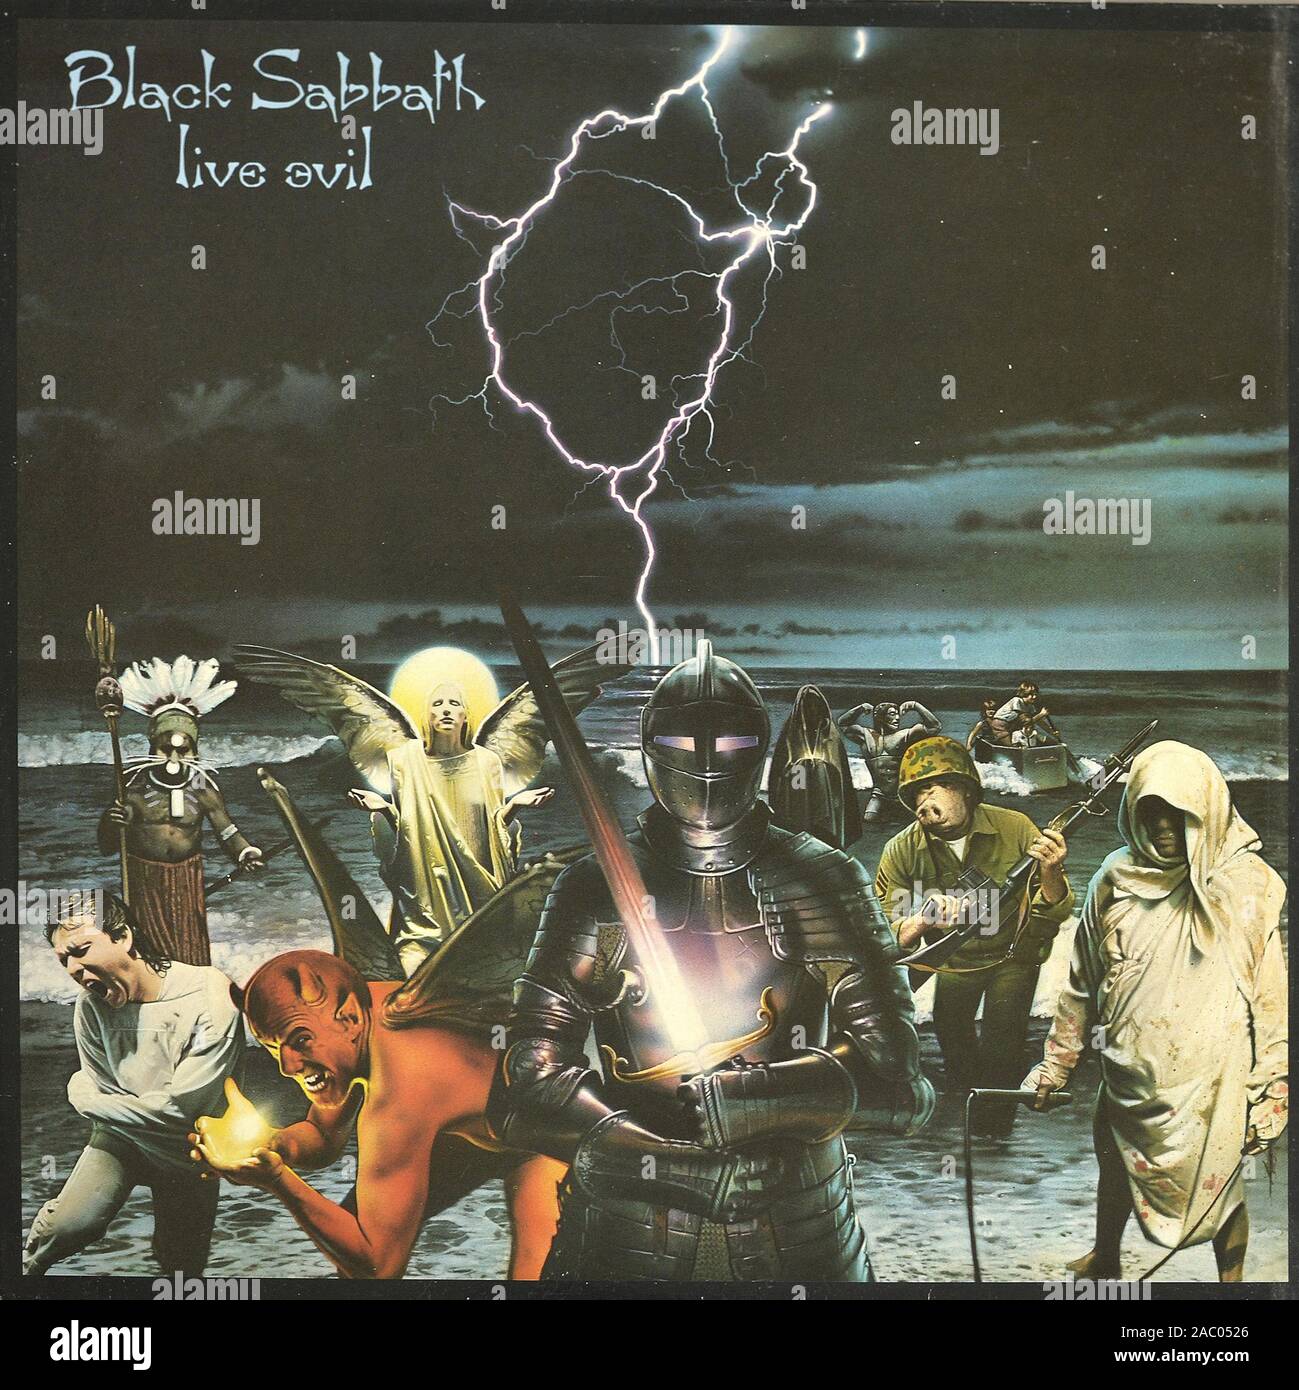 BLACK SABBATH Live Evil - Vintage vinyl album cover Stock Photo - Alamy